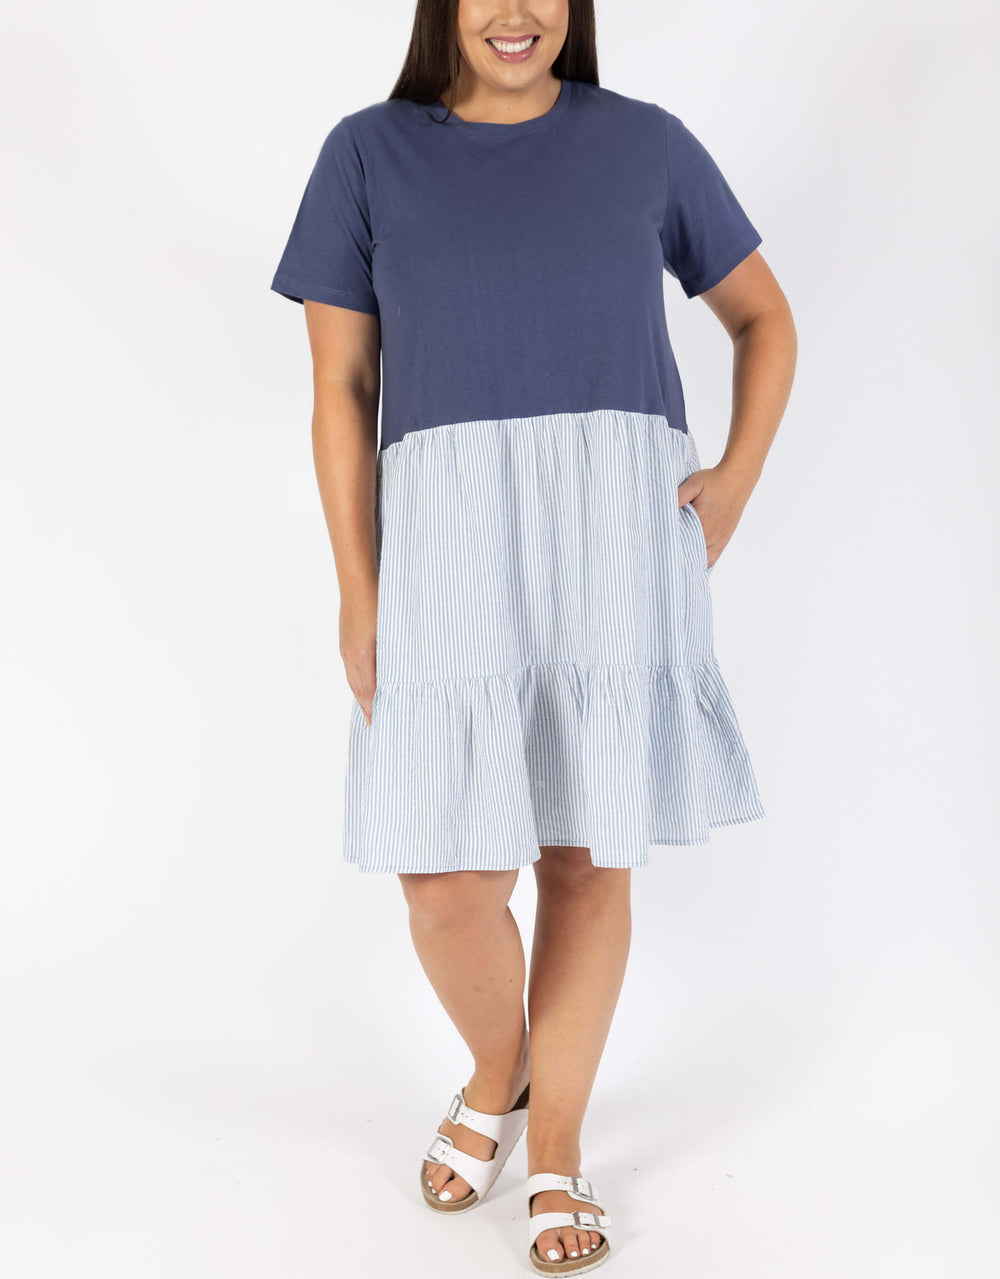 Plus Size Matilda Stripe Dress - Ocean Blue/White Stripe